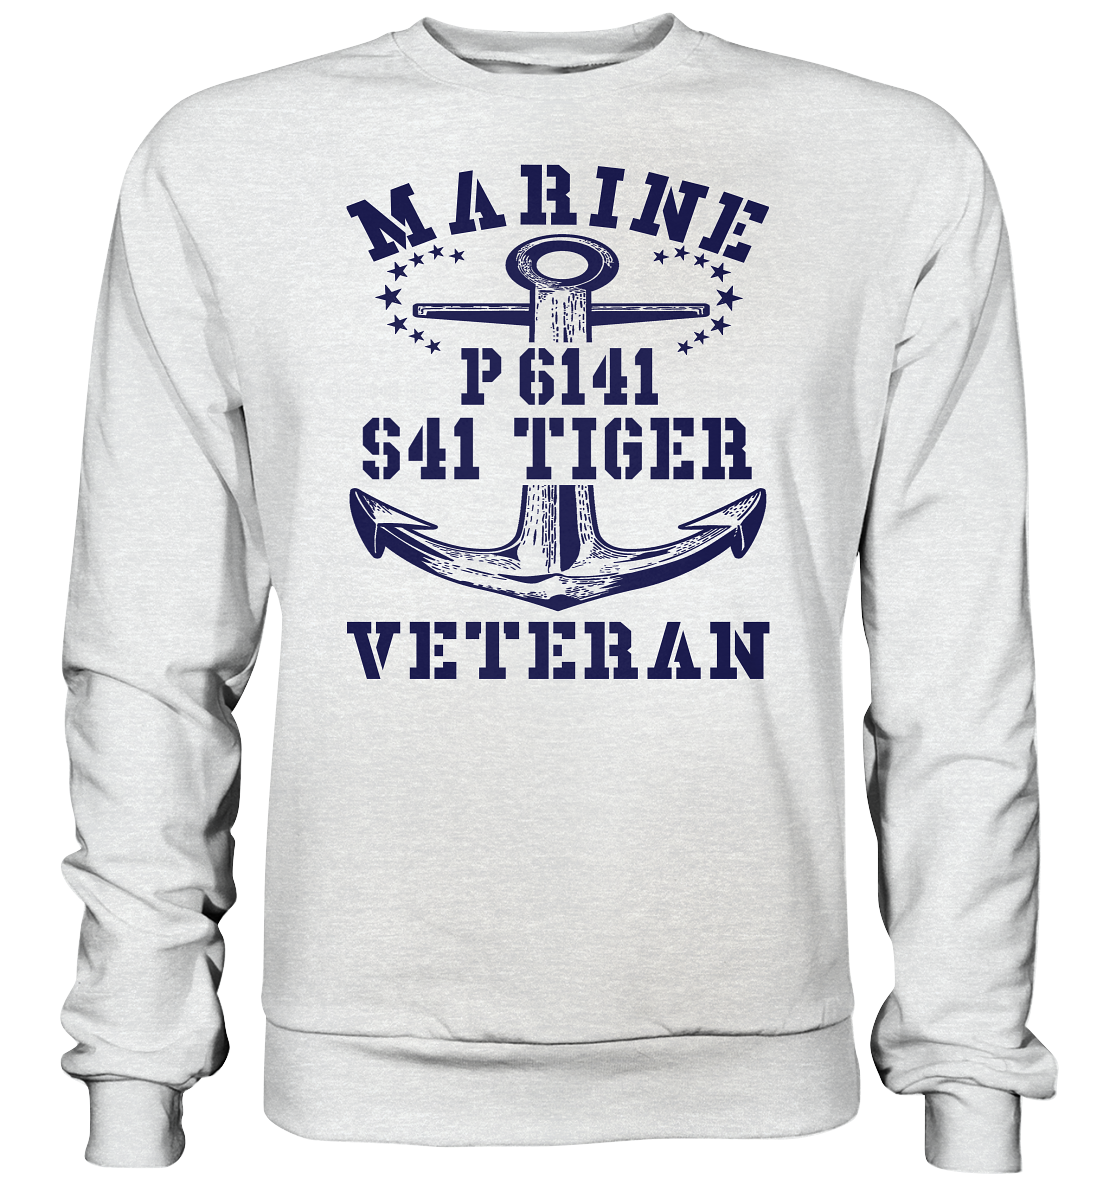 P6141 S41 TIGER Marine Veteran - Premium Sweatshirt